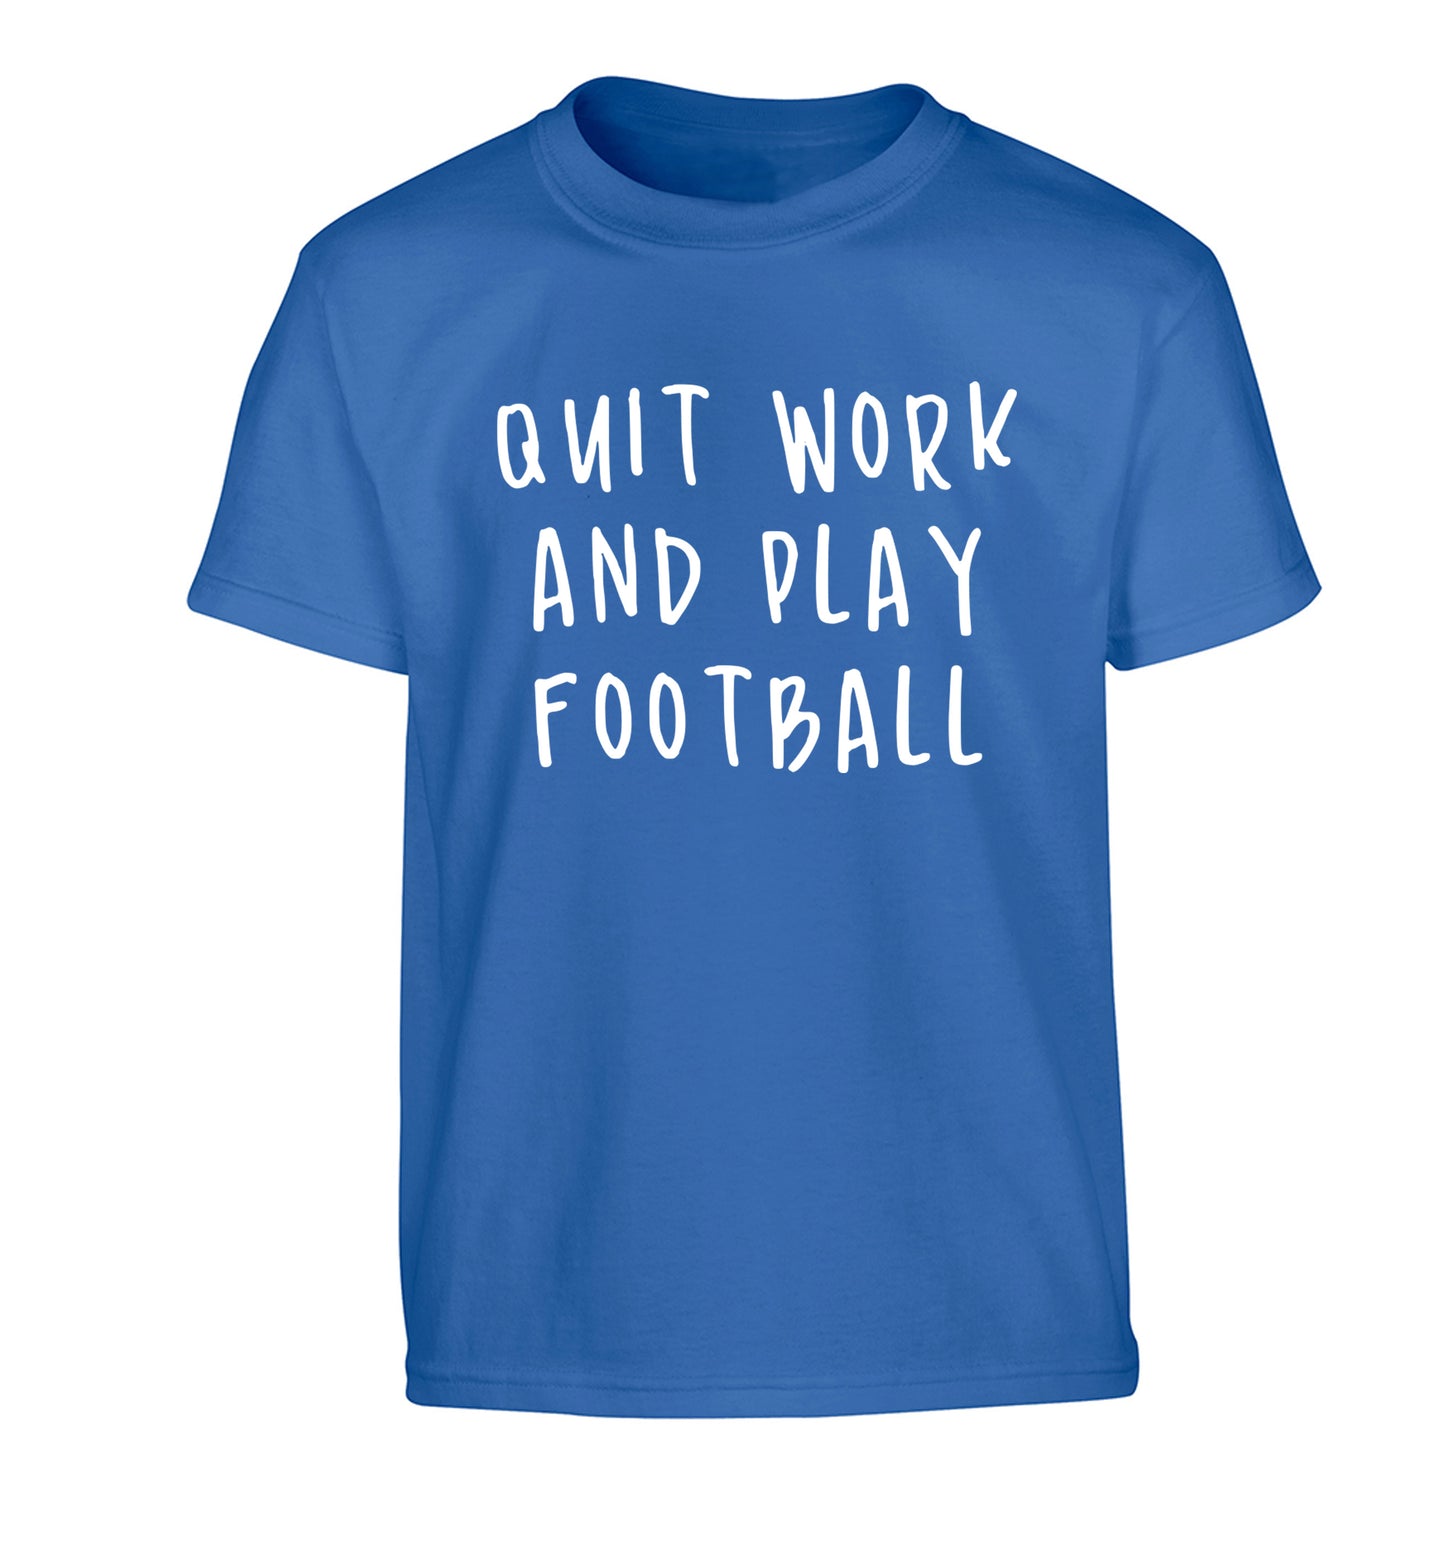 Quit work play football Children's blue Tshirt 12-14 Years